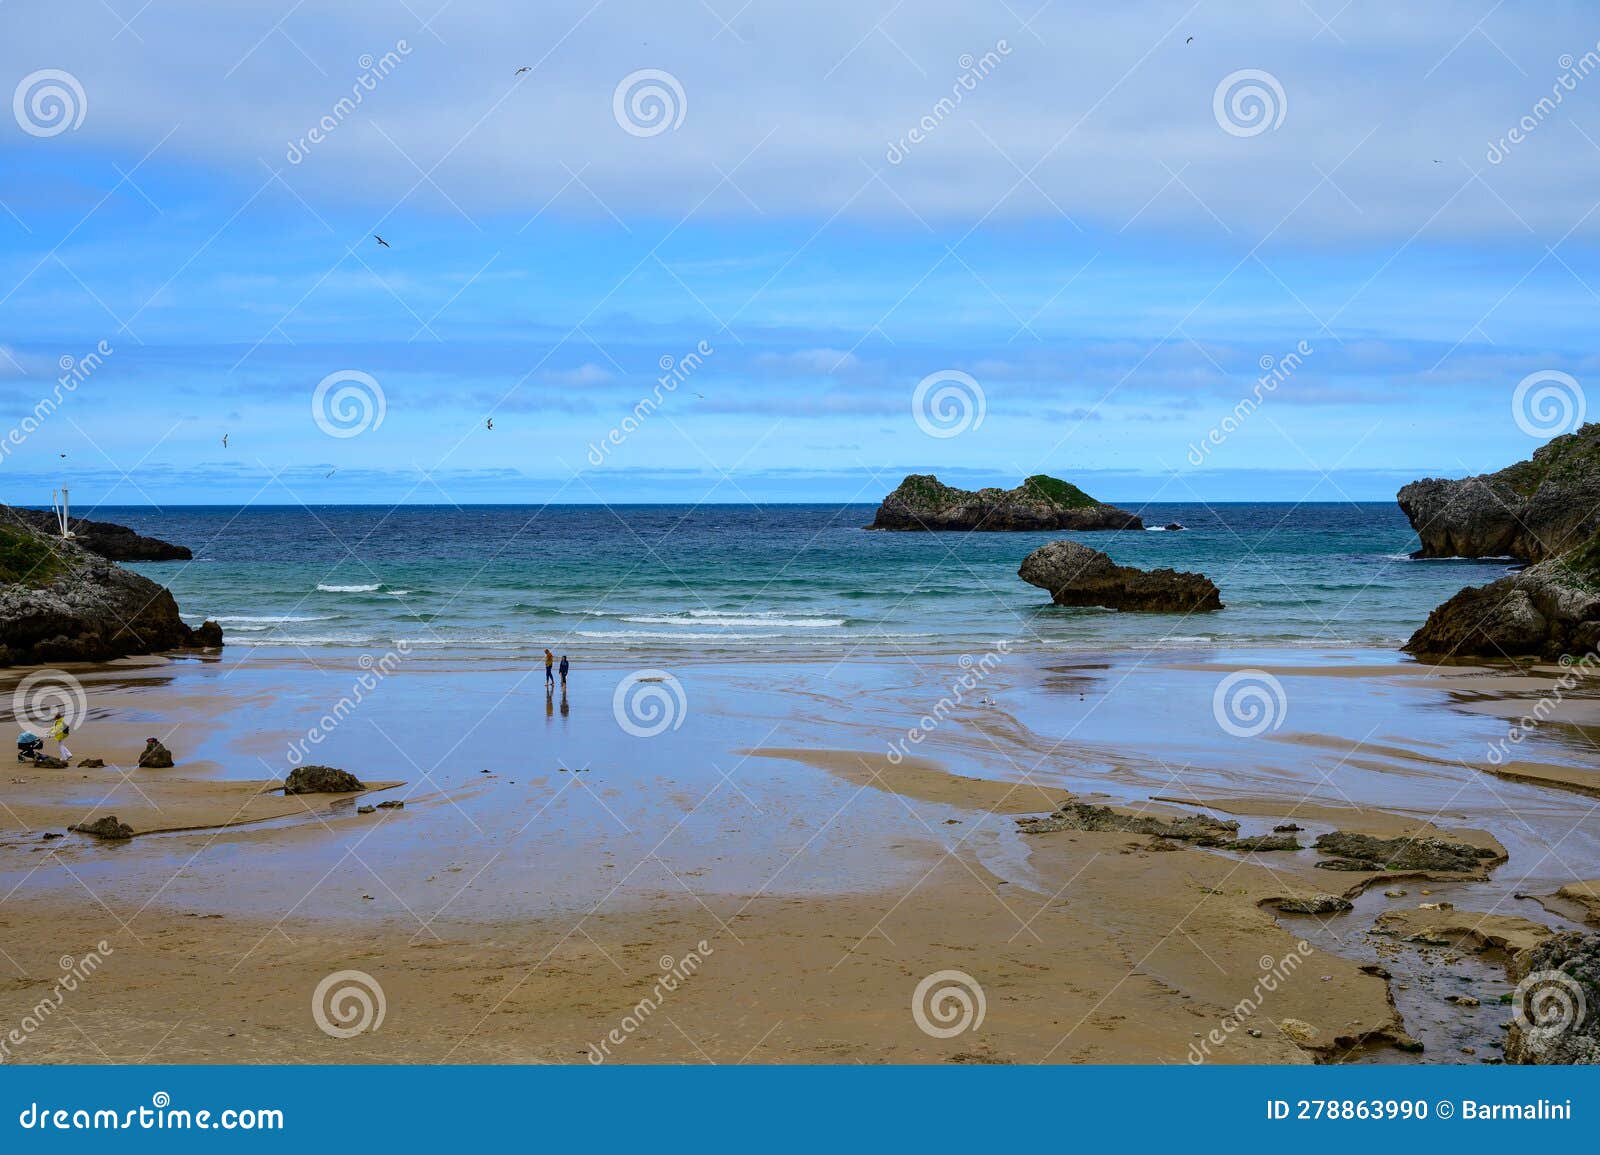 view on playa de palombina las camaras in celorio, green coast of asturias, north spain with sandy beaches, cliffs, hidden caves,